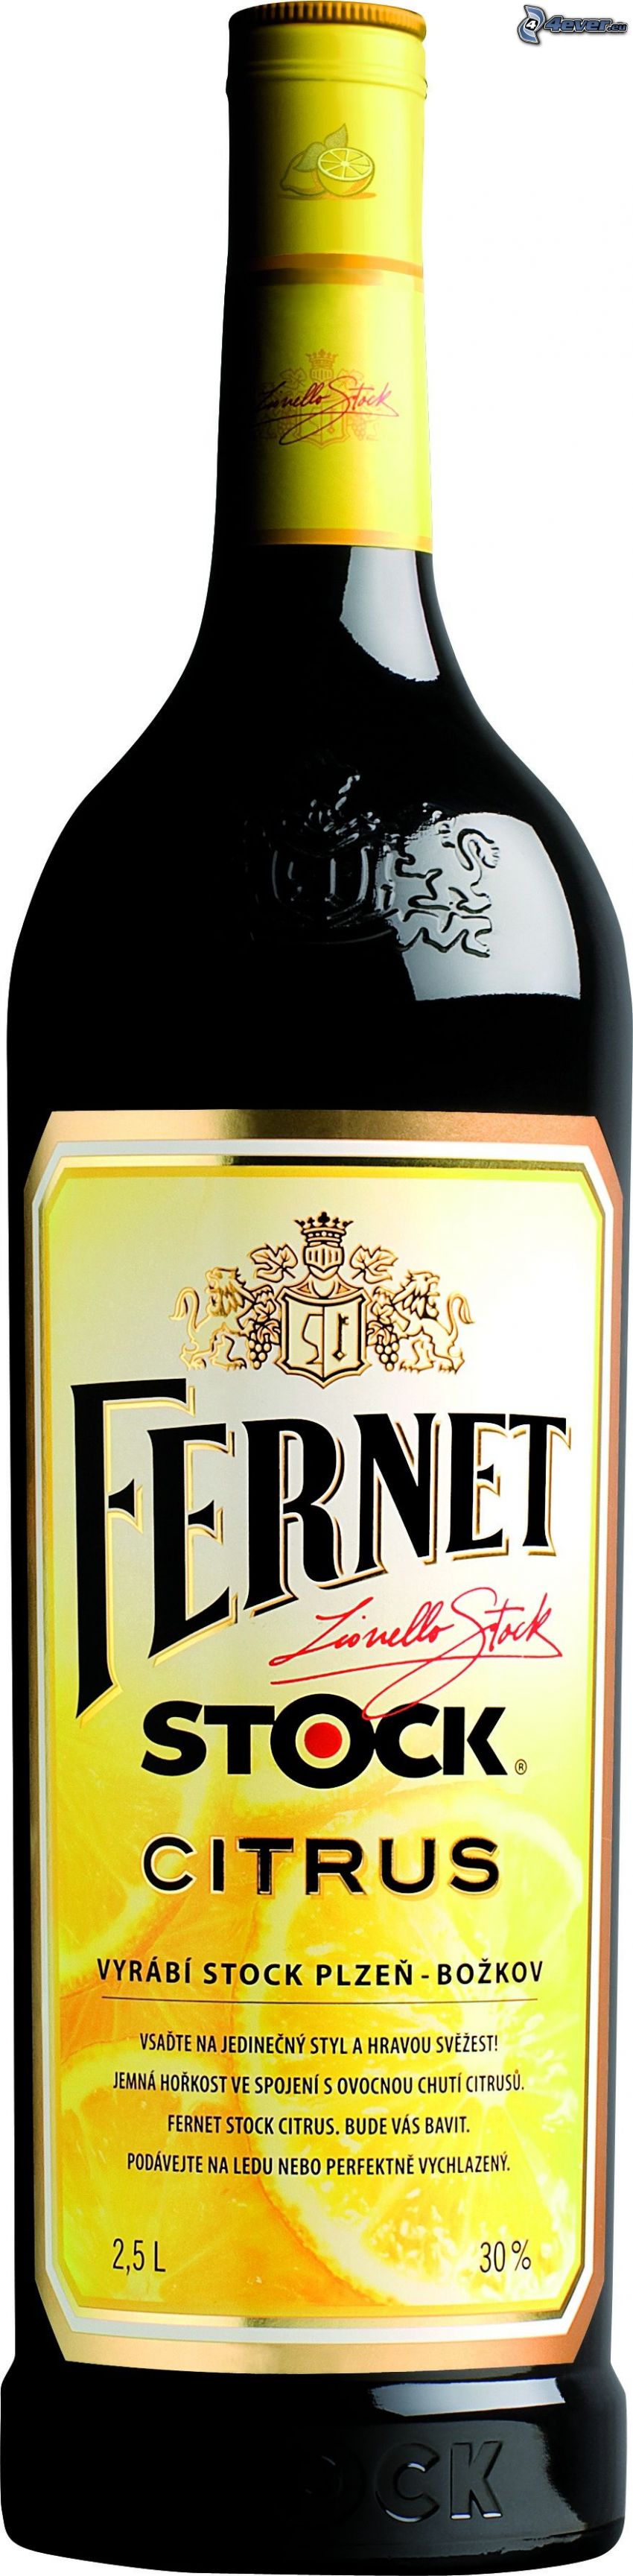 Fernet Stock Citrus, botella, alcohol